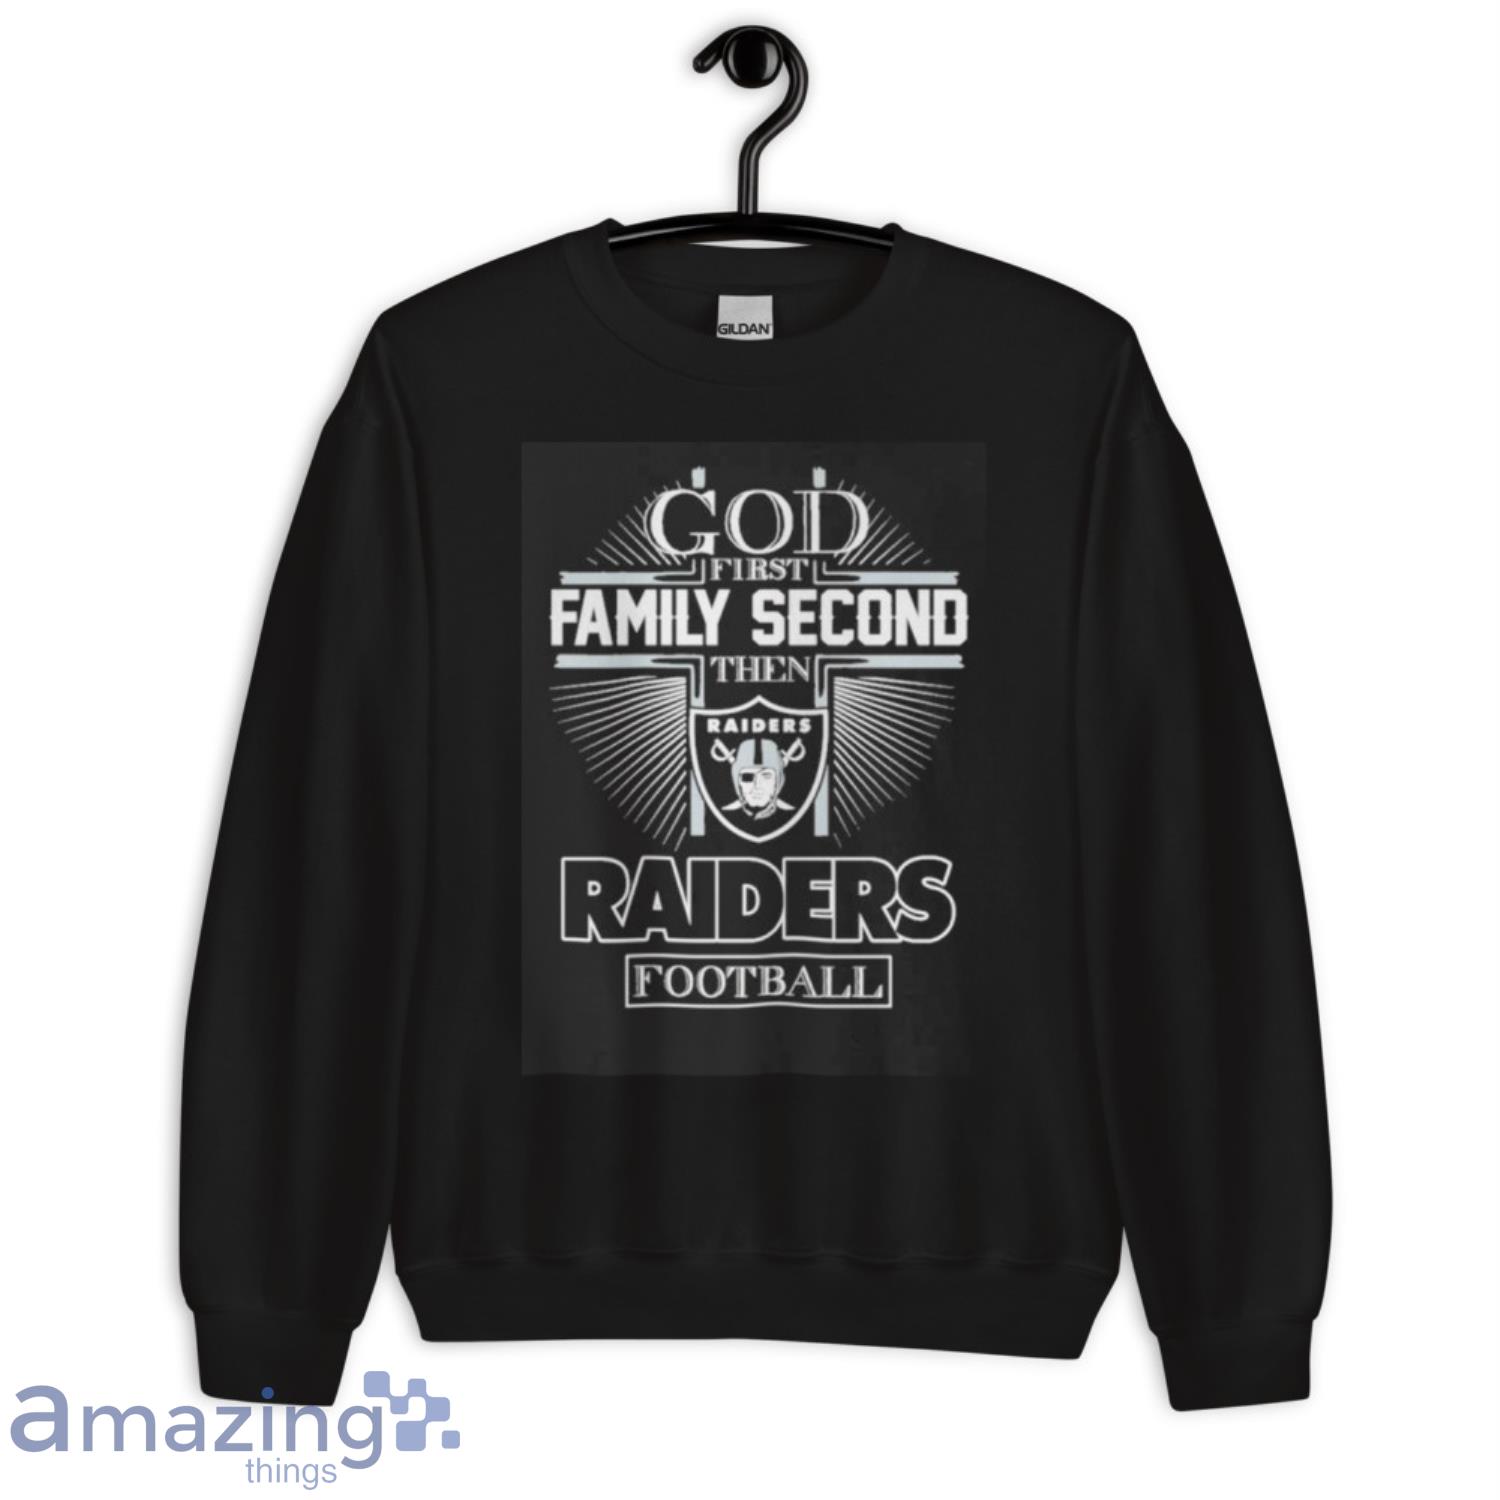 God First Family Second Then Las Vegas Raiders Football Shirt